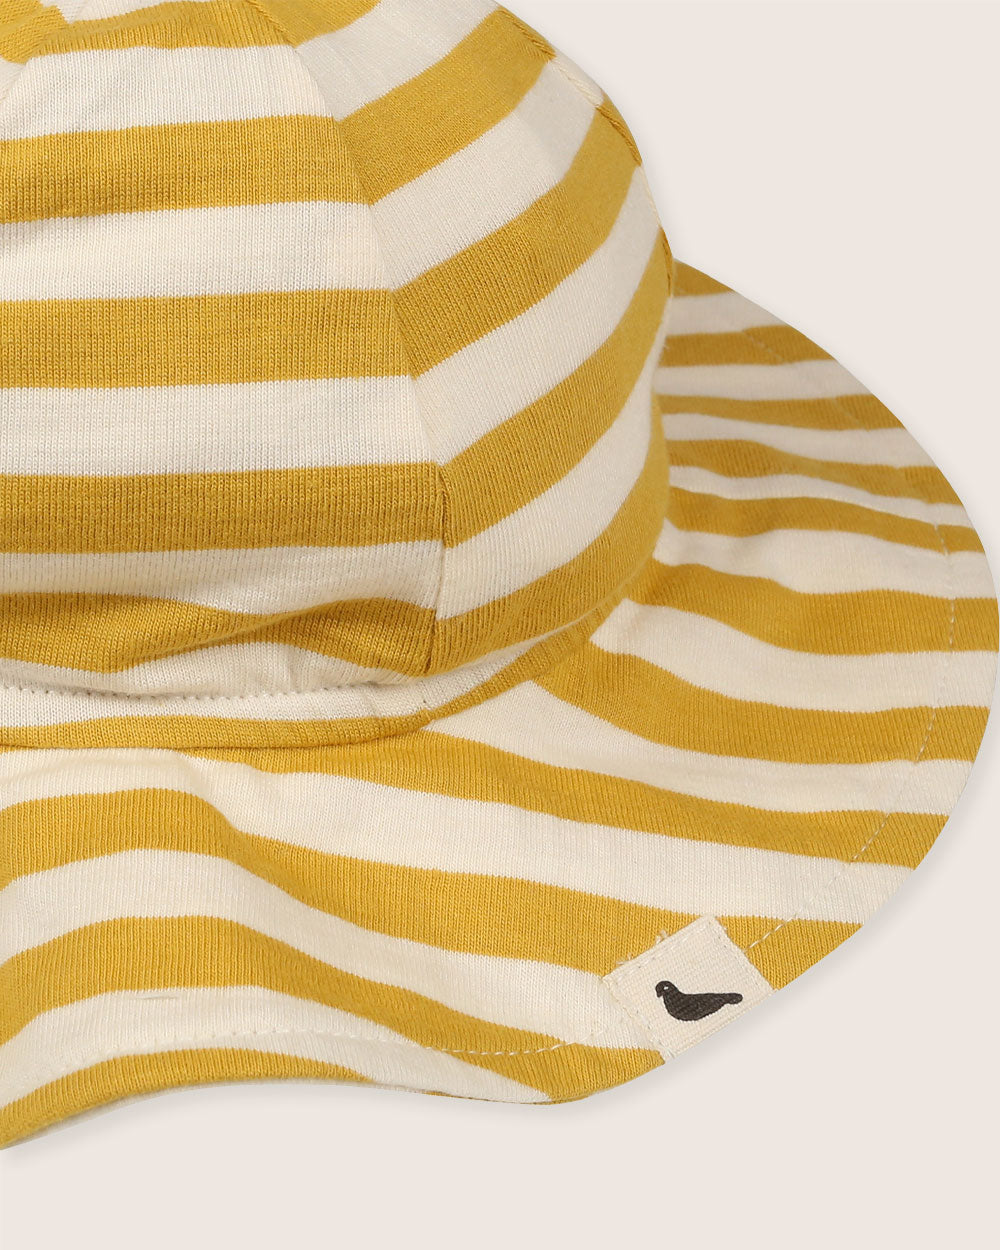 Stripe organic cotton baby hat